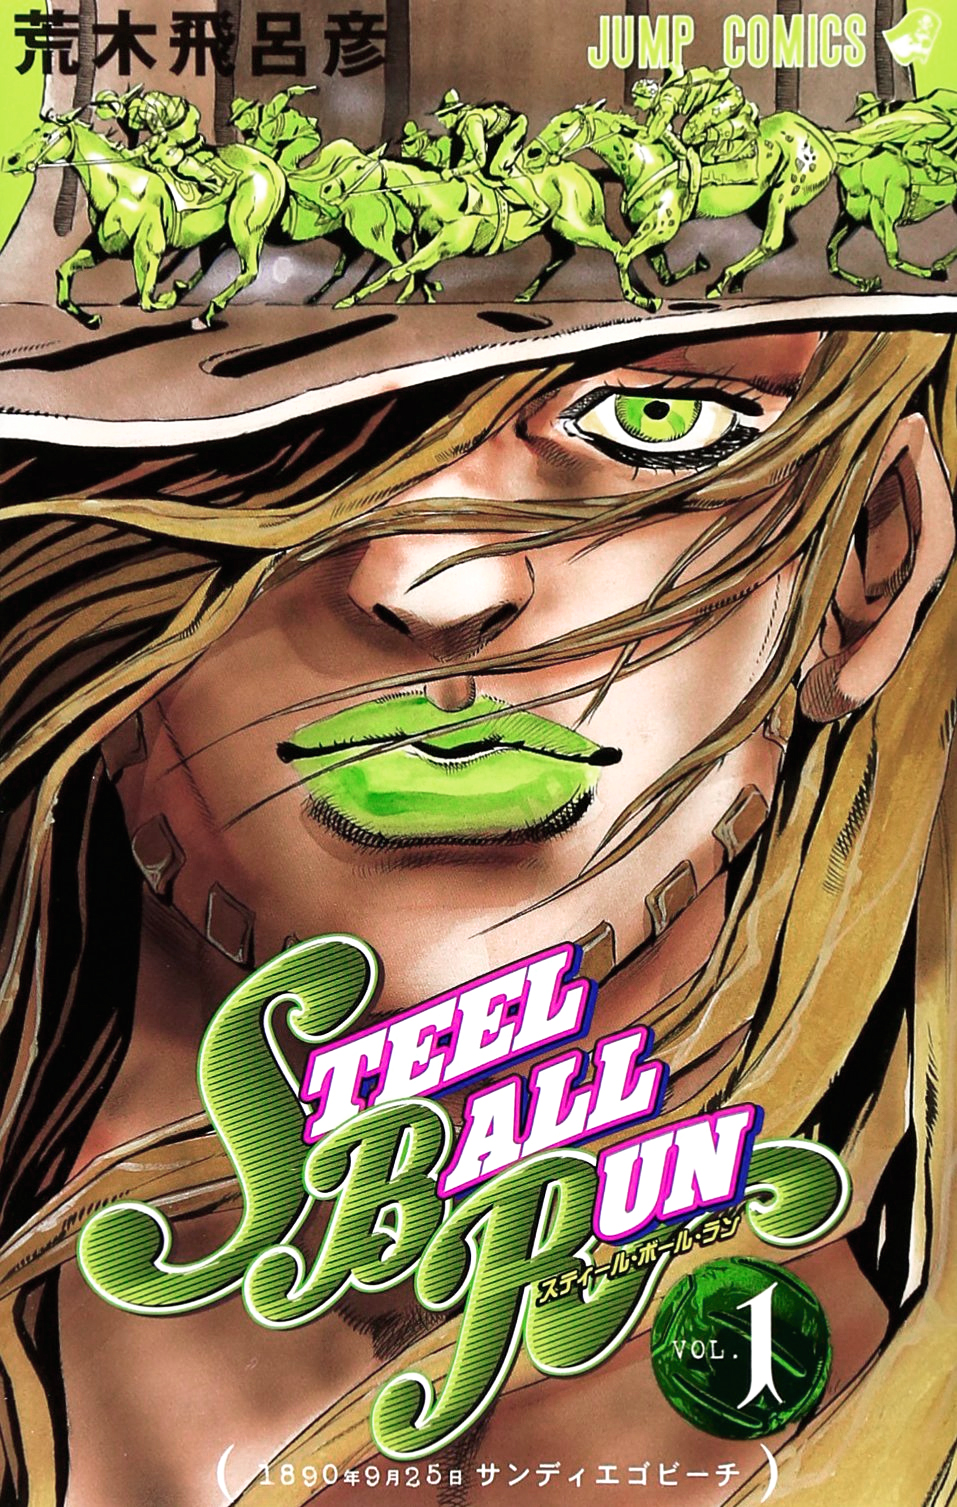 Tusk Act 4 Awakening  Steel Ball Run Manga Animation 